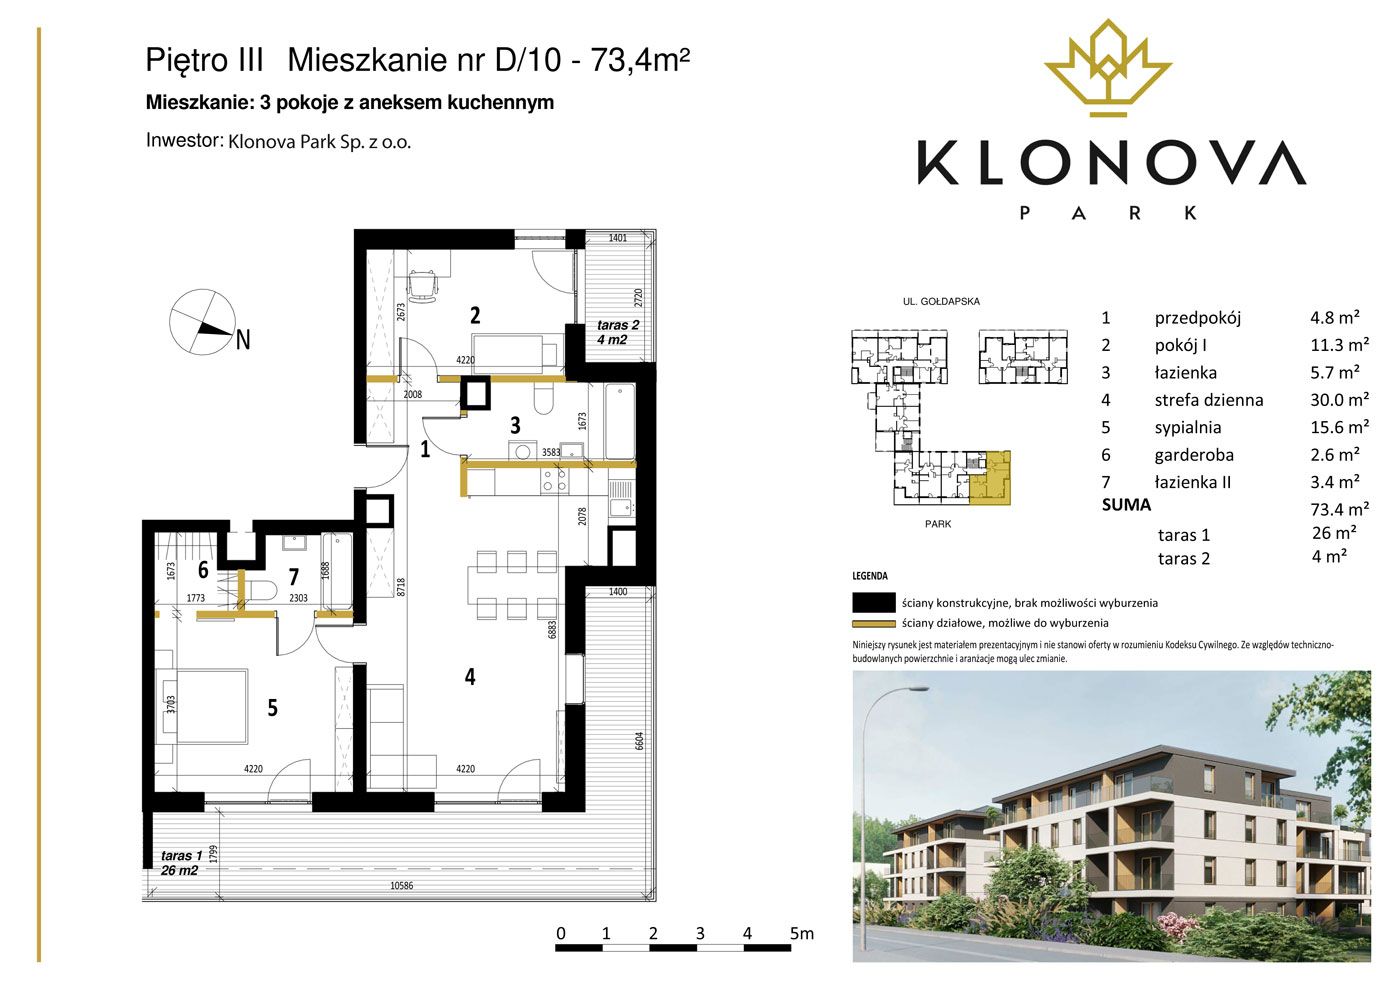 Apartamenty Klonova Park - Plan mieszkania D/10